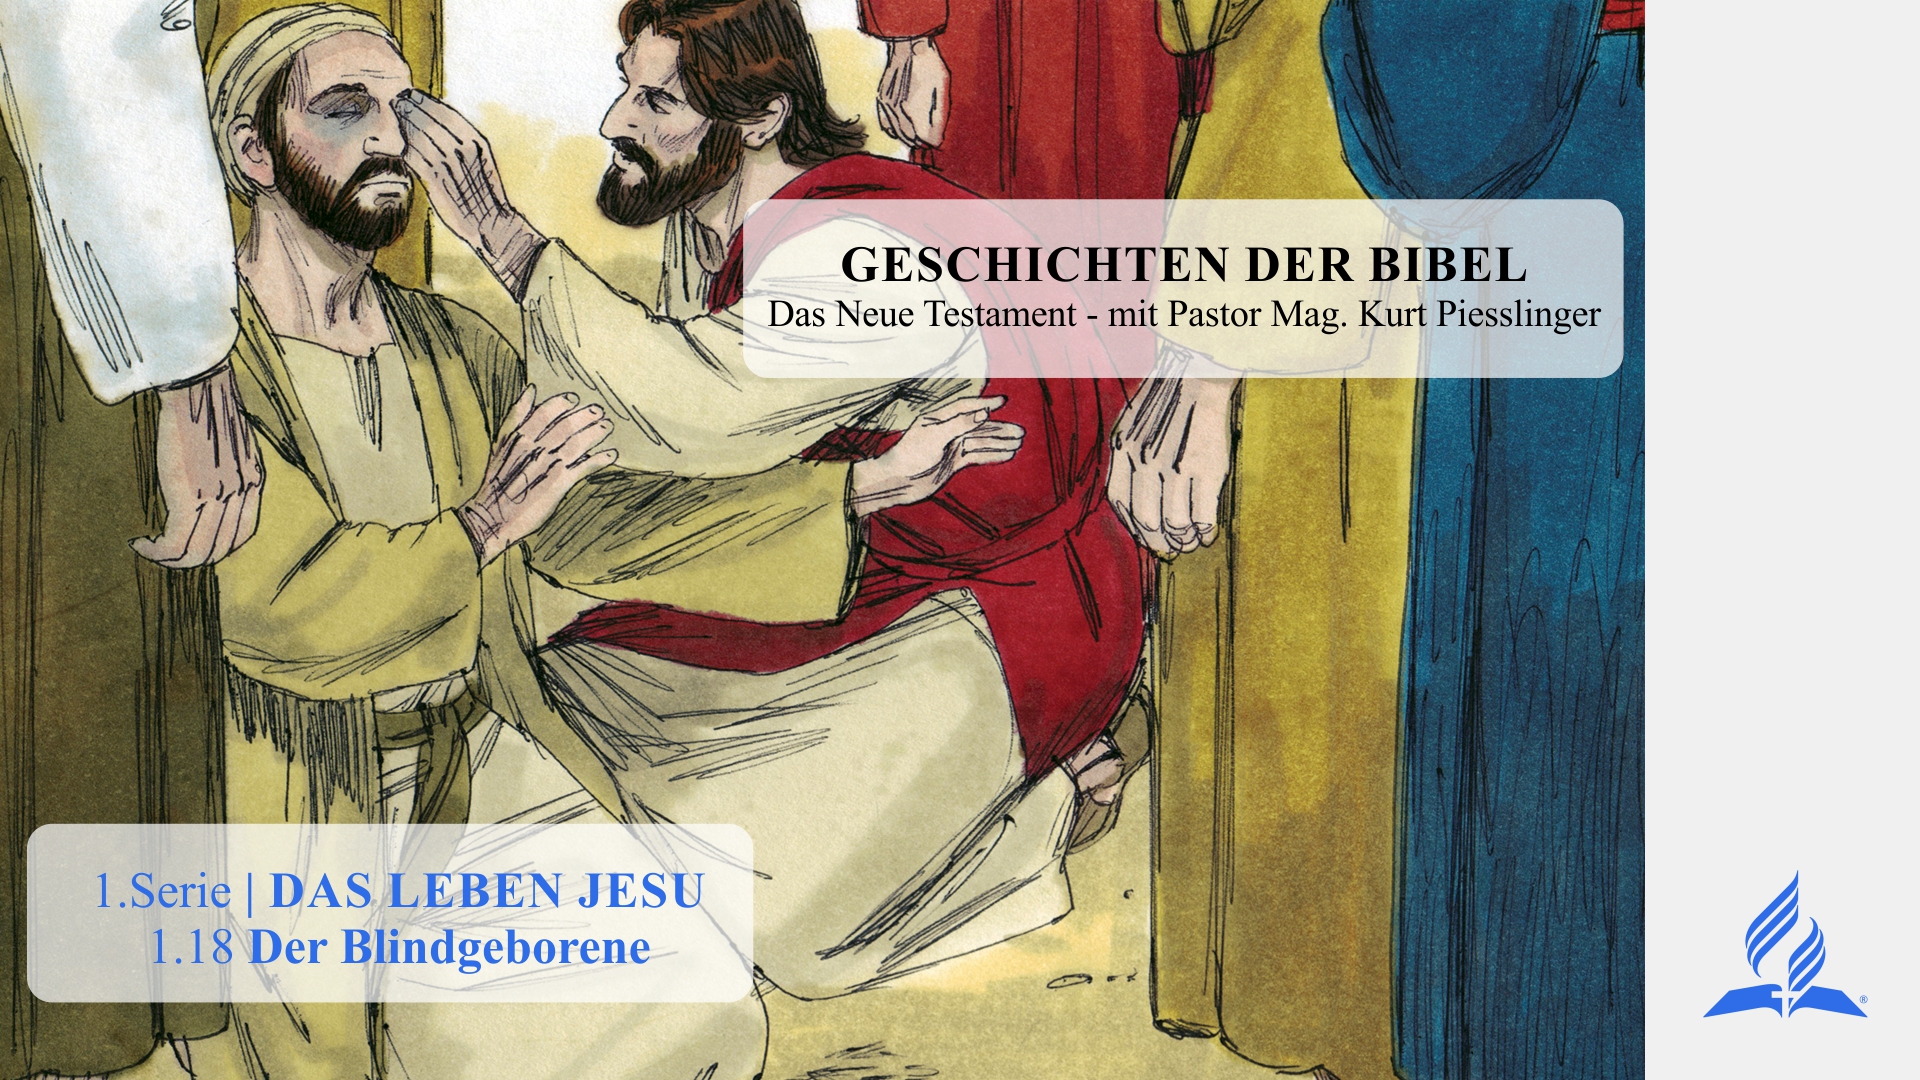 GESCHICHTEN DER BIBEL: 1.18 Der Blindgeborene – 1.DAS LEBEN JESU | Pastor Mag. Kurt Piesslinger